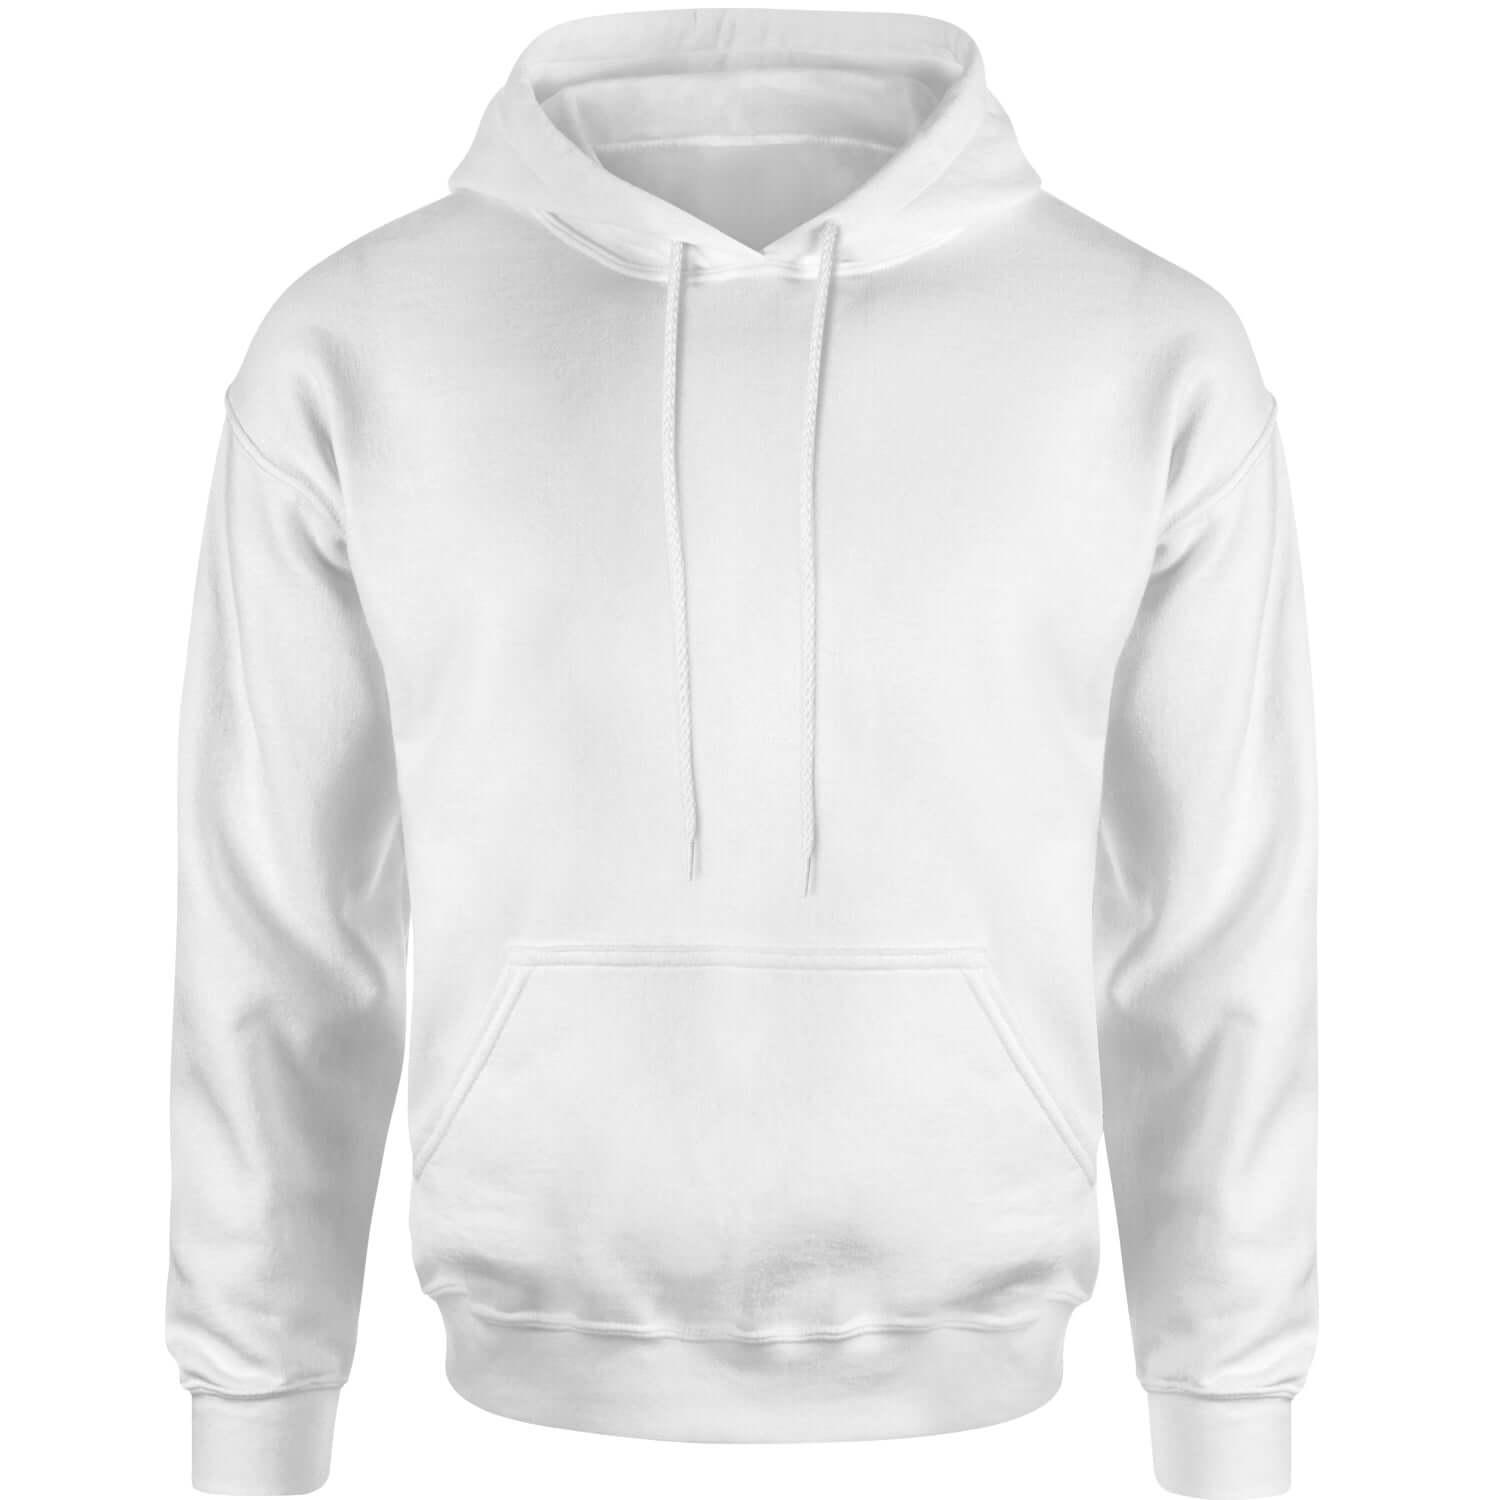 Basics - Plain Blank Adult Hoodie Sweatshirt blank, clothing, plain, tshirts by Expression Tees